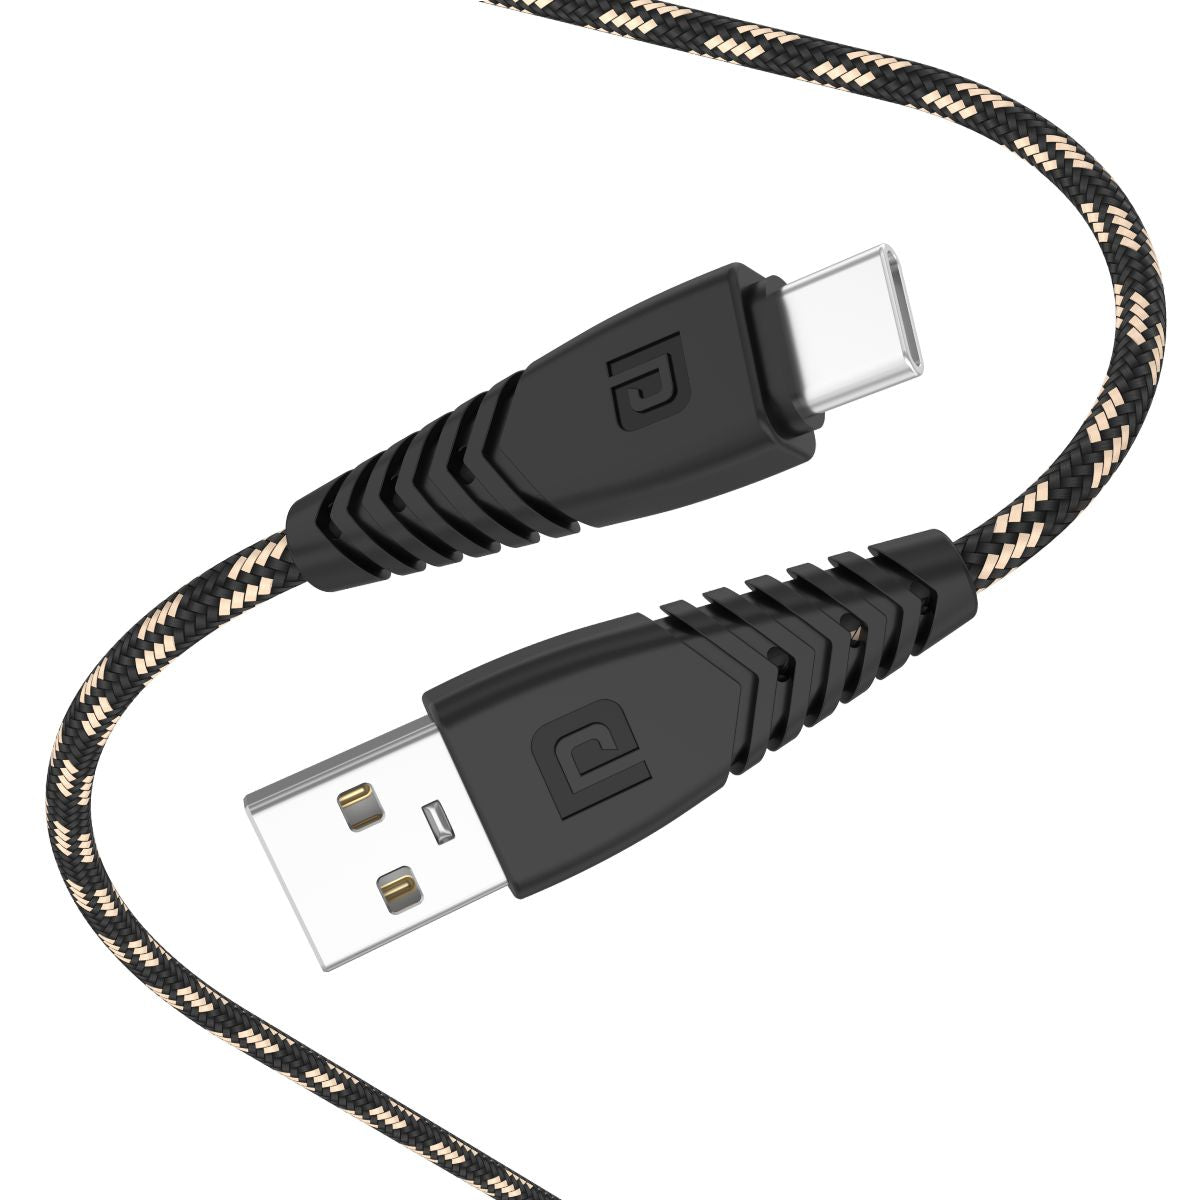 PORTRONICS-Konnect Spydr Type C USB Cable